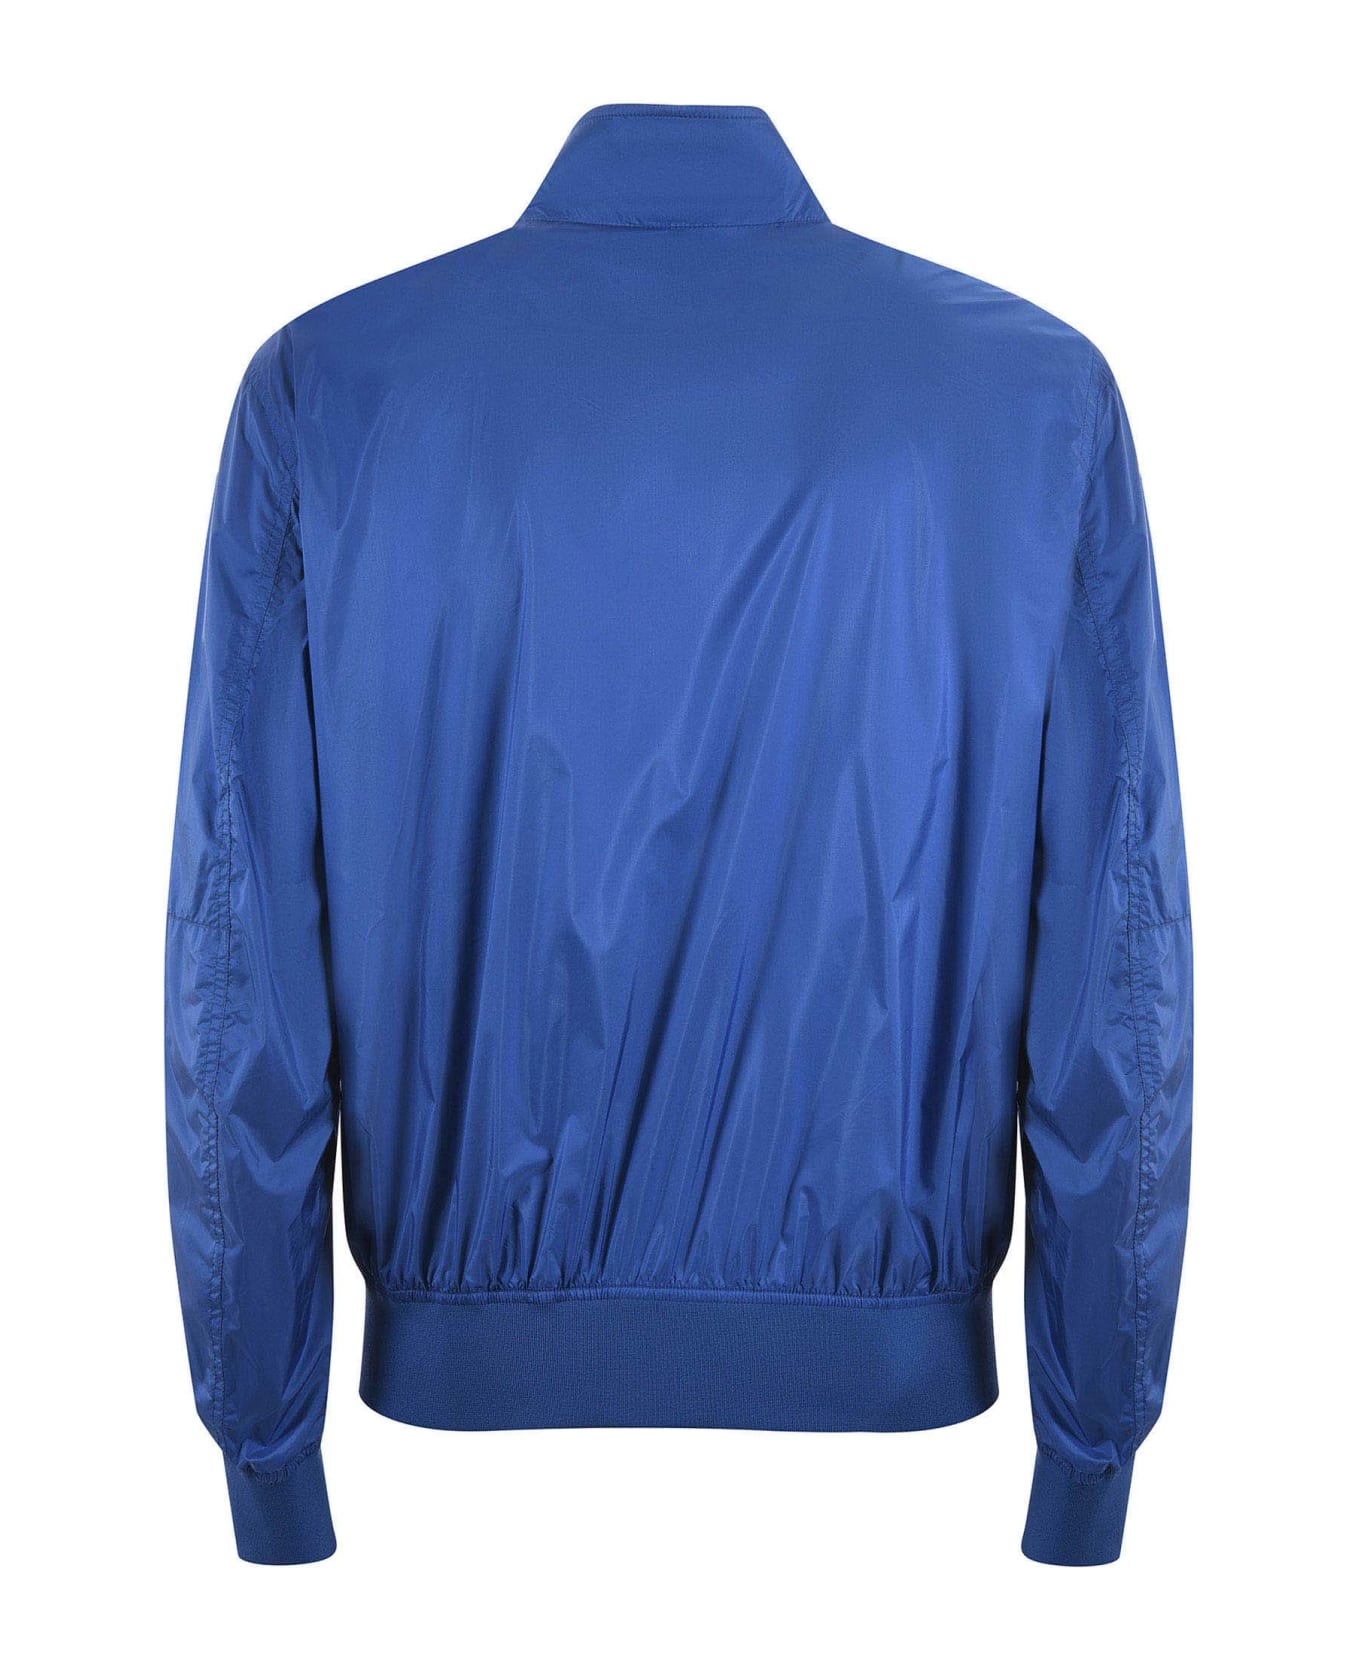 Blauer Jacket - Blu cobalto ジャケット